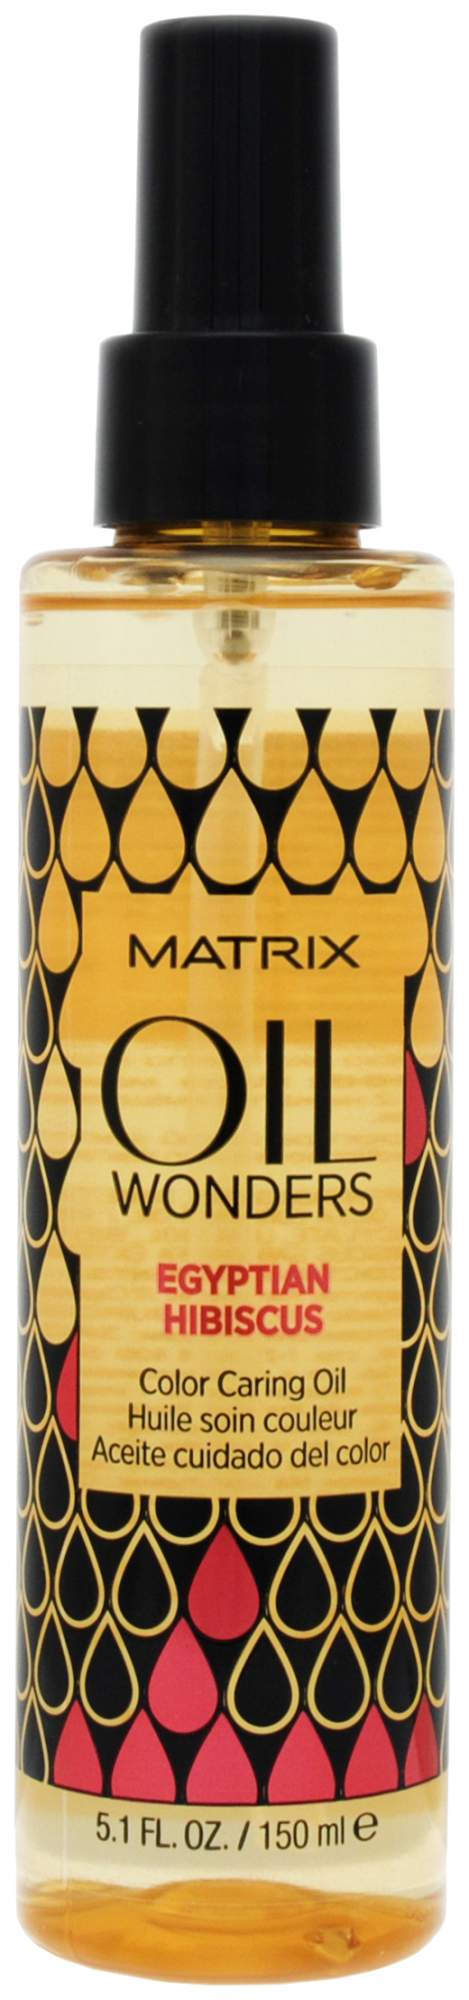 Купить масло для волос Matrix Oil Wonders Egyptian Hibiscus 150 мл, цены на Мегамаркет | Артикул: 100023632536